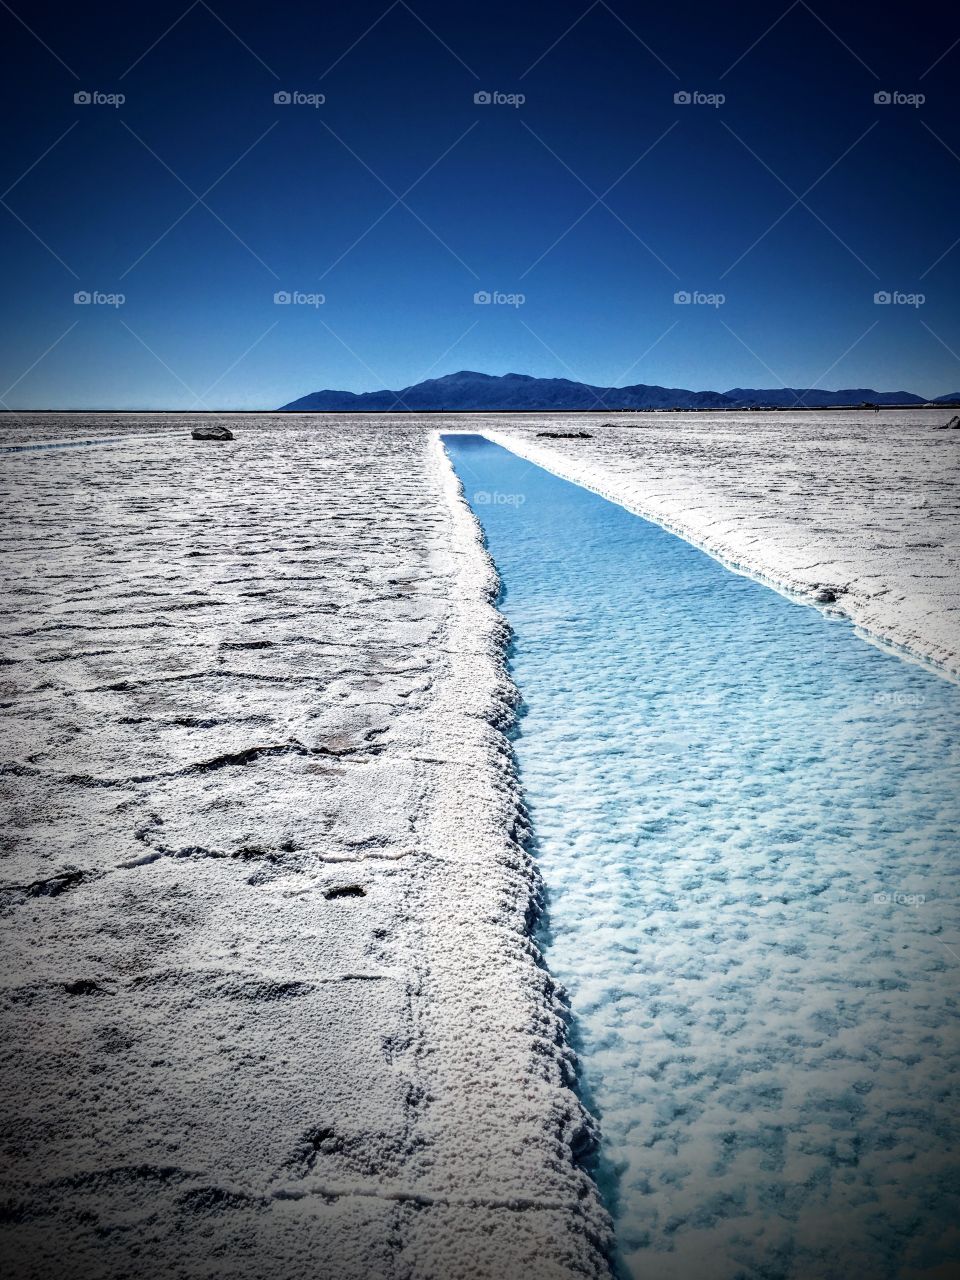 Salty desert in Argentina.